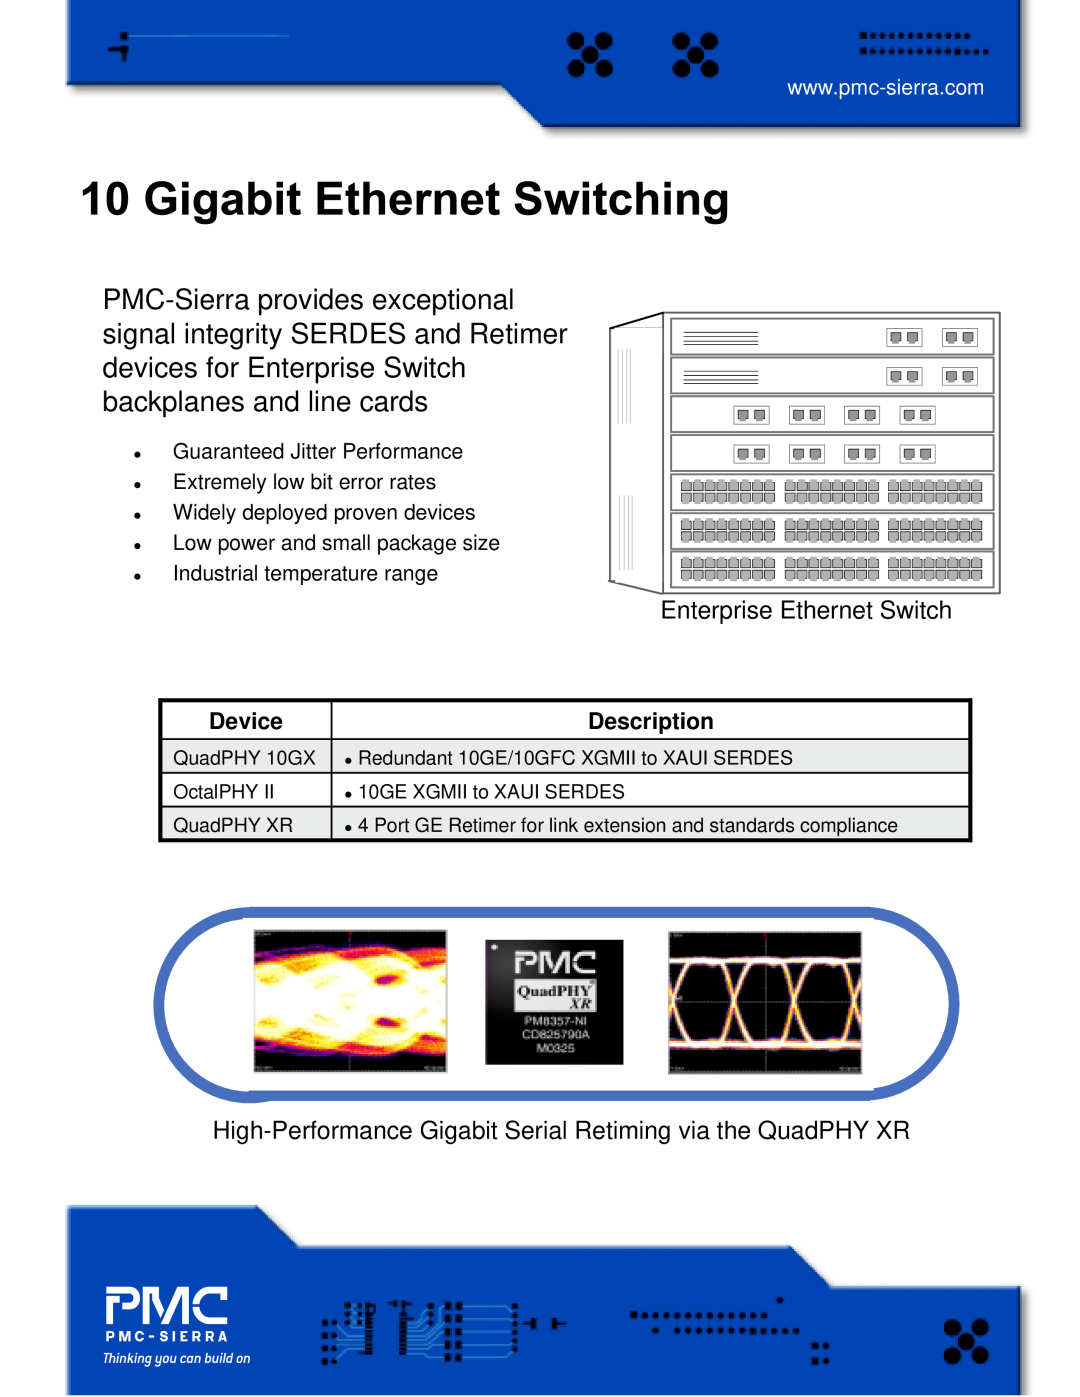 PMC-Sierra Gigabit Ethernet Switching manual Device, Description, Enterprise Ethernet Switch, QuadPHY 10GX, OctalPHY 